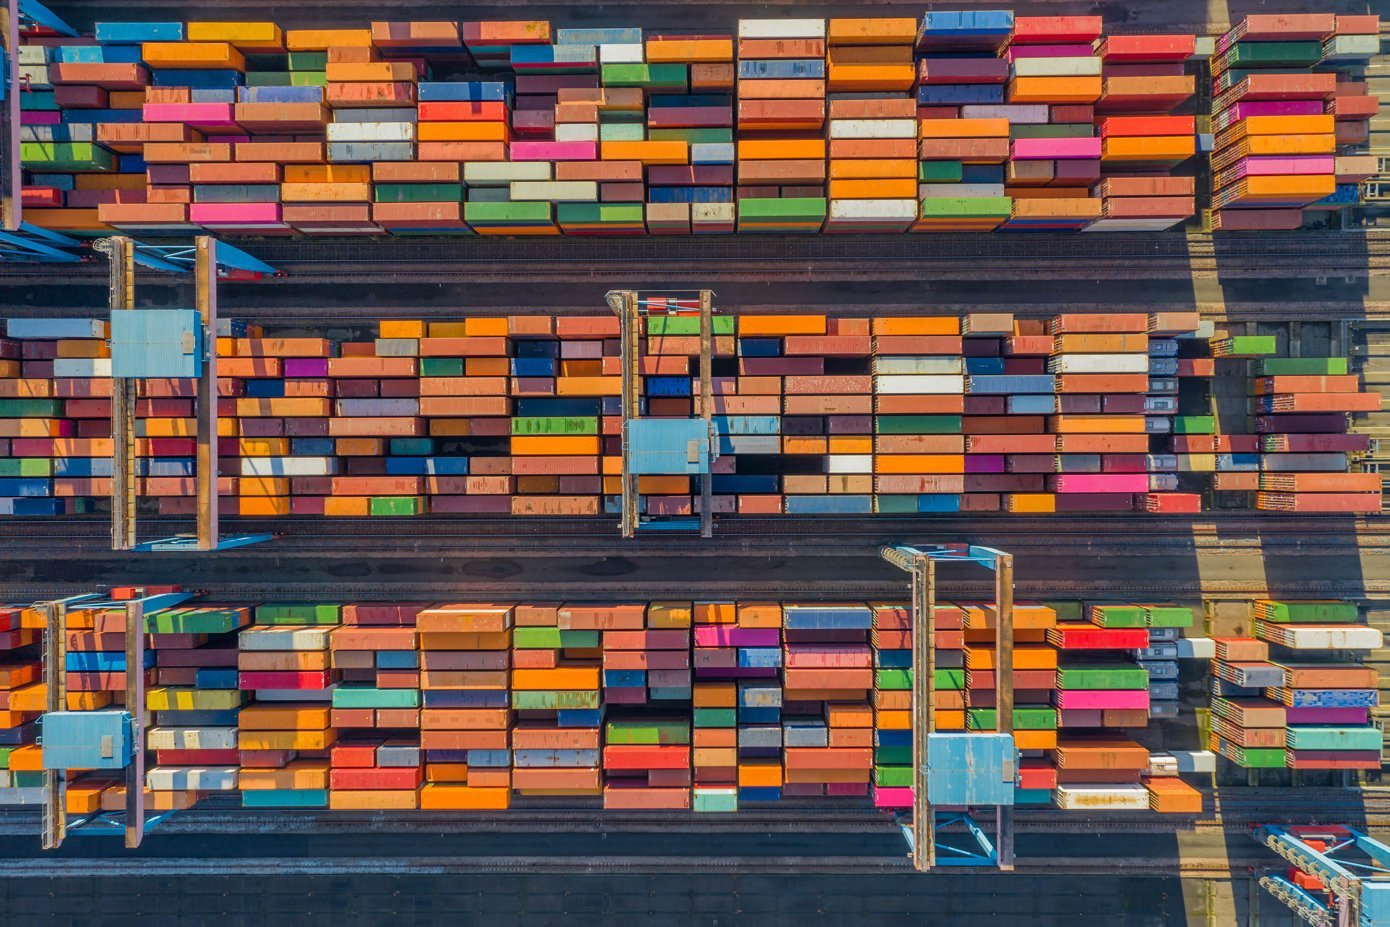 Containerhafen. Foto: Frederick Doerschem / iStock / Getty Images Plus via Getty Images